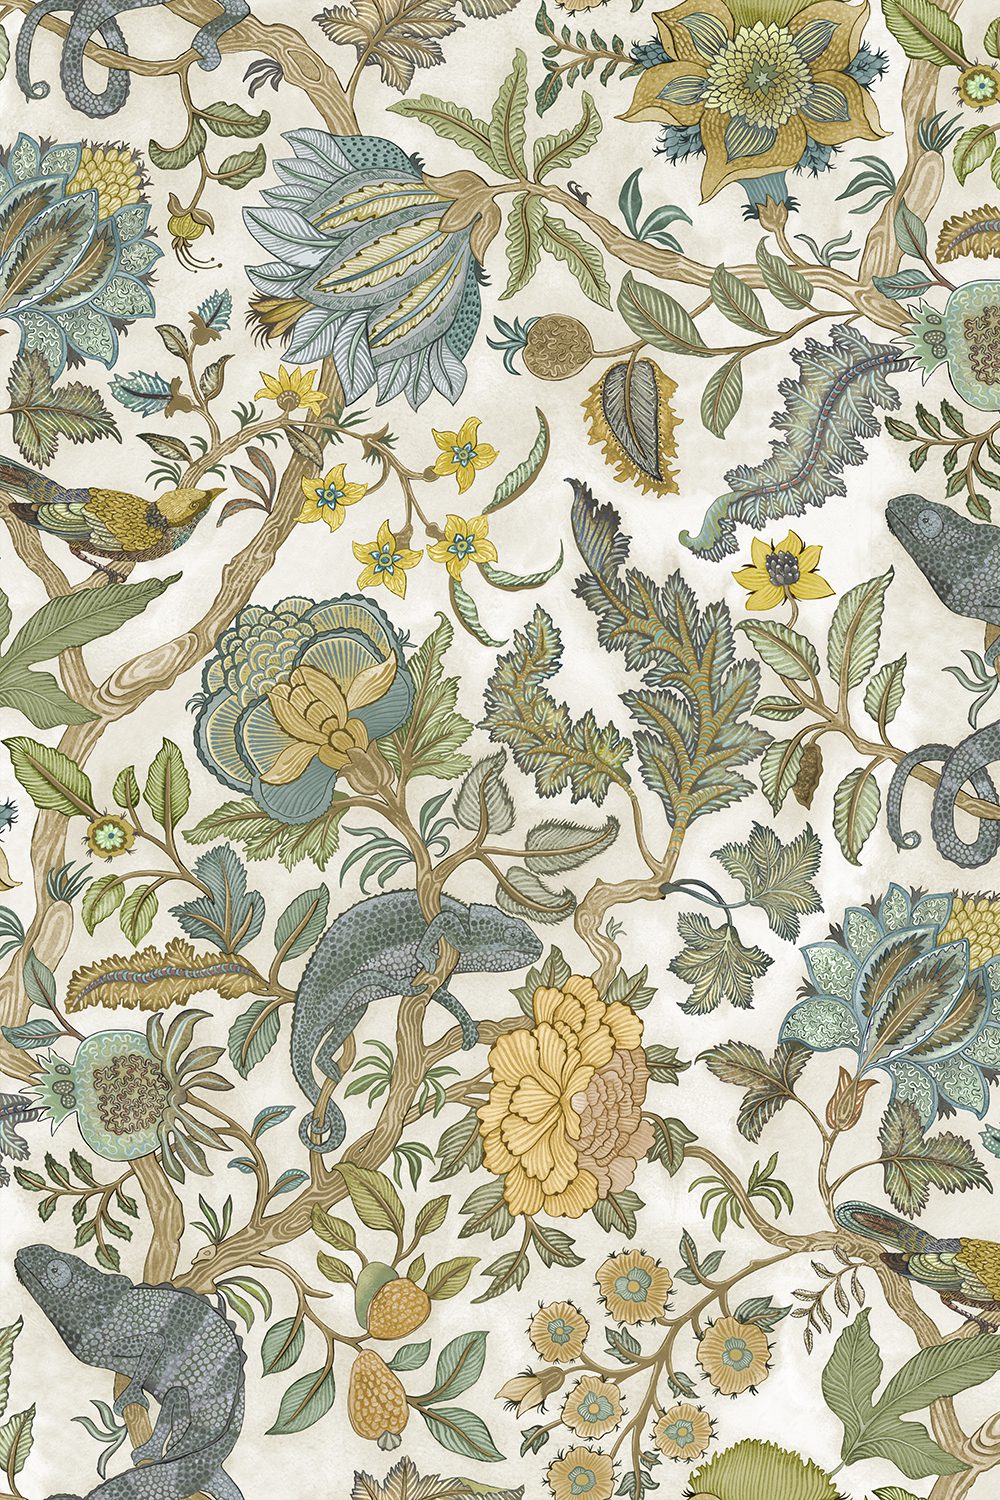 Josephine-munsey-wallpapers-interiors-chameleon-trail-floral-green-yellow-white-light-blue-wallpaper